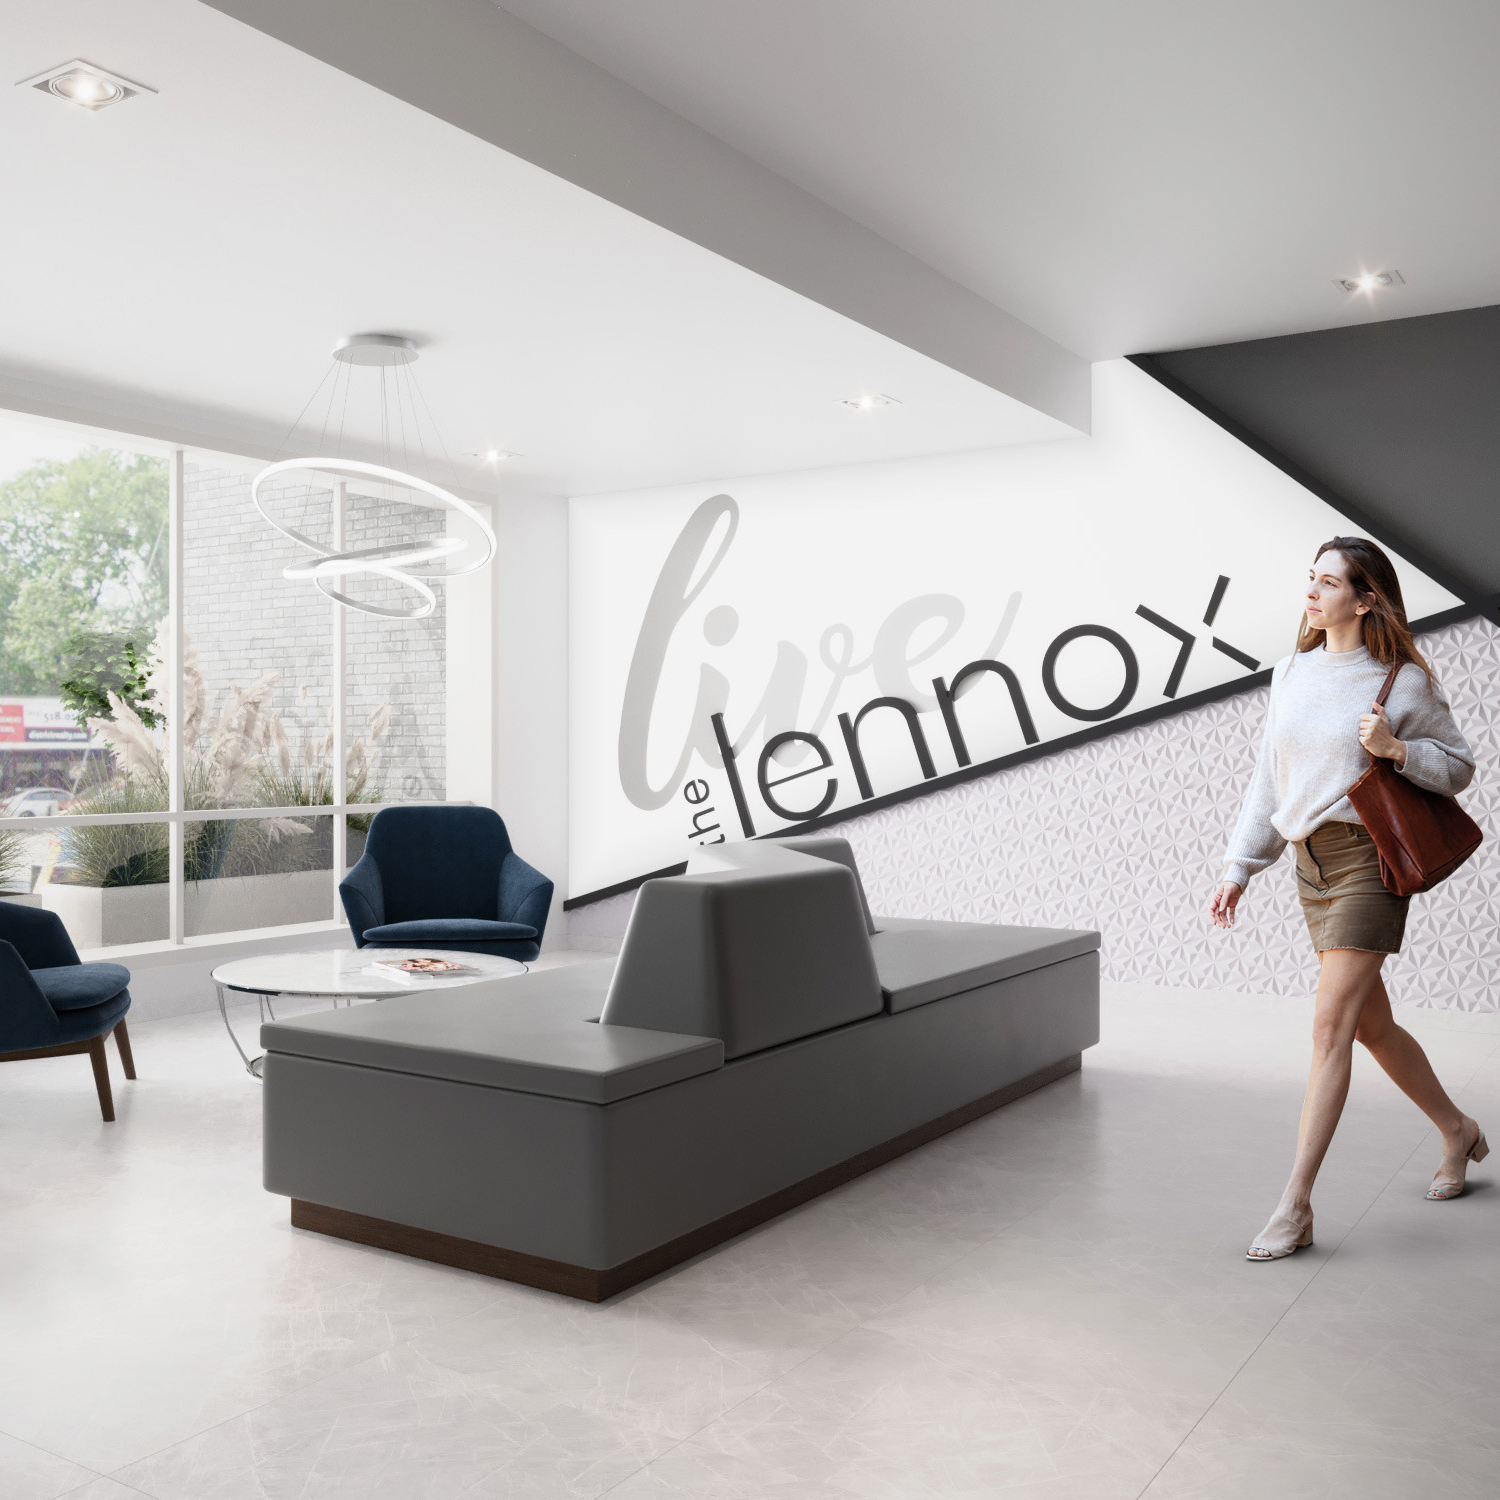 The Lennox logo